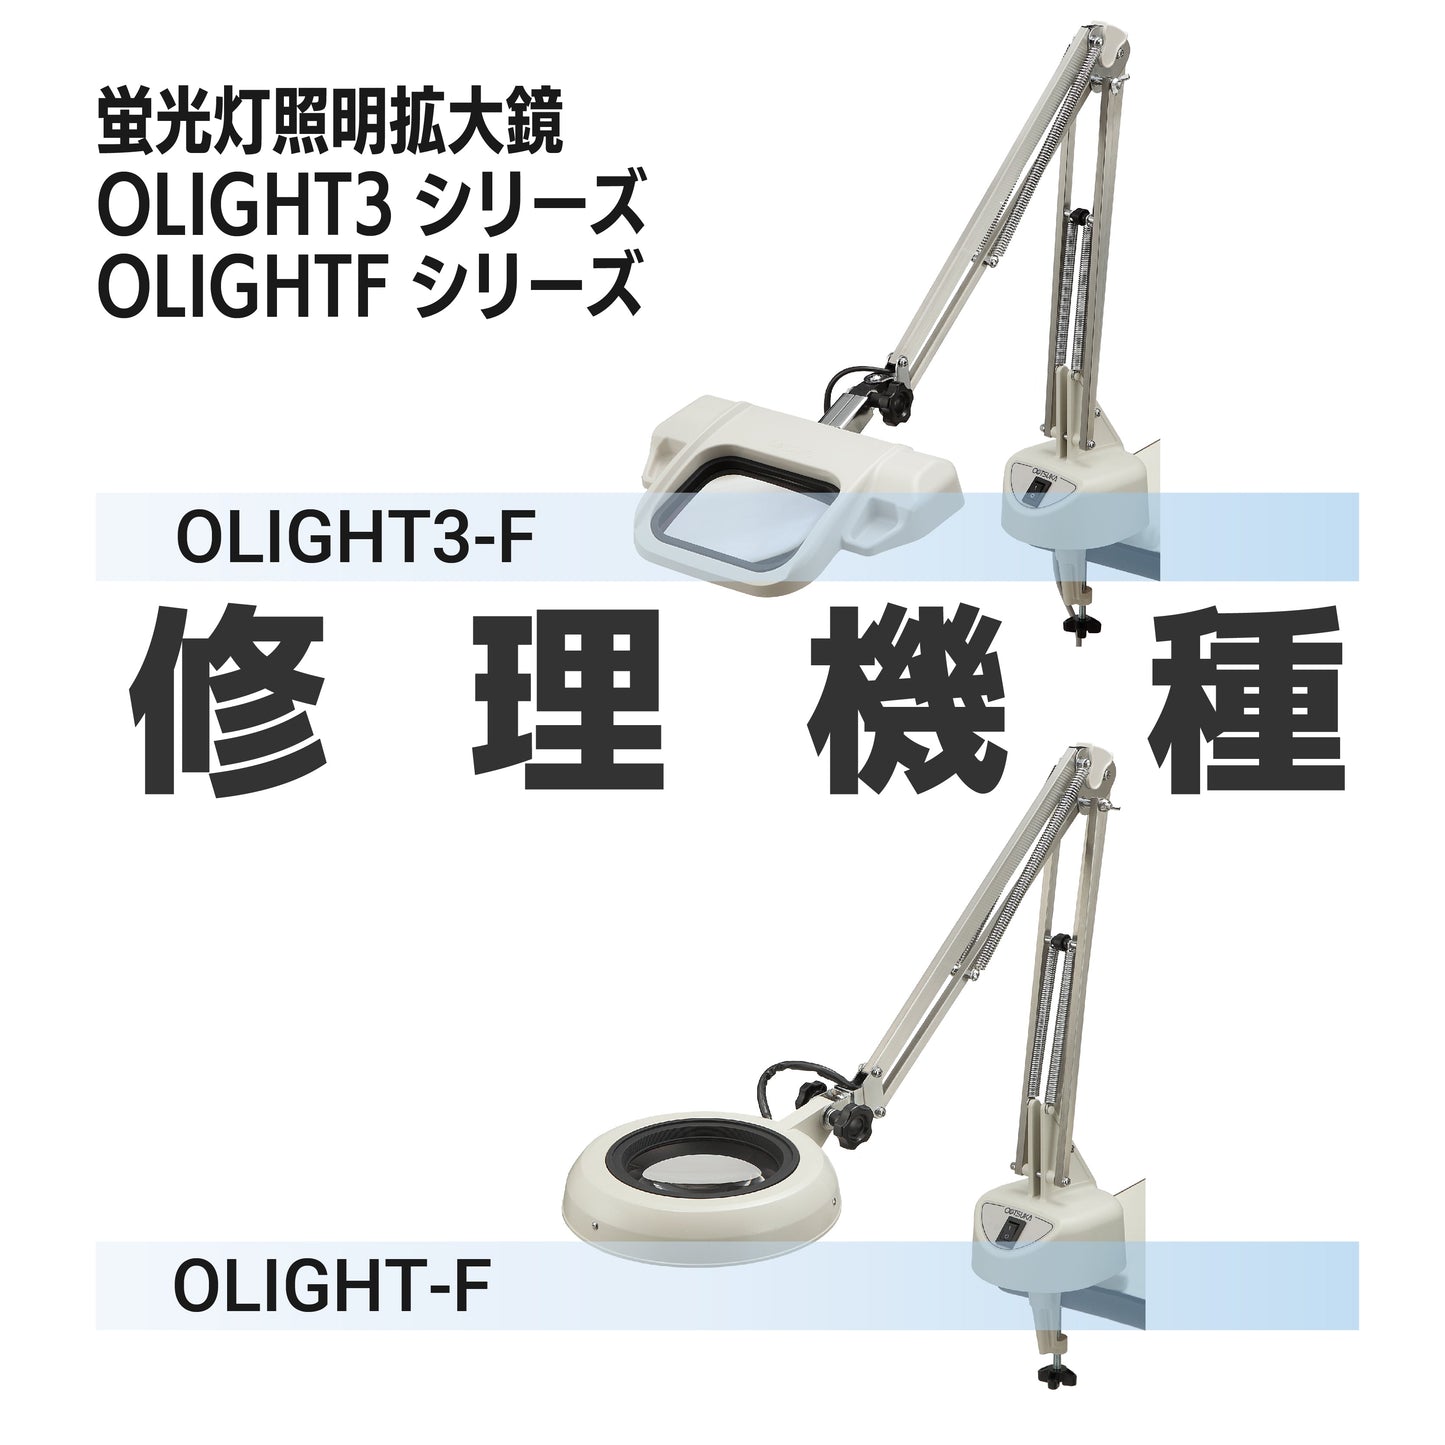 OLIGHT3 series: OLIGHT3-F type / OLIGHT-F series: OLIGHT-F type